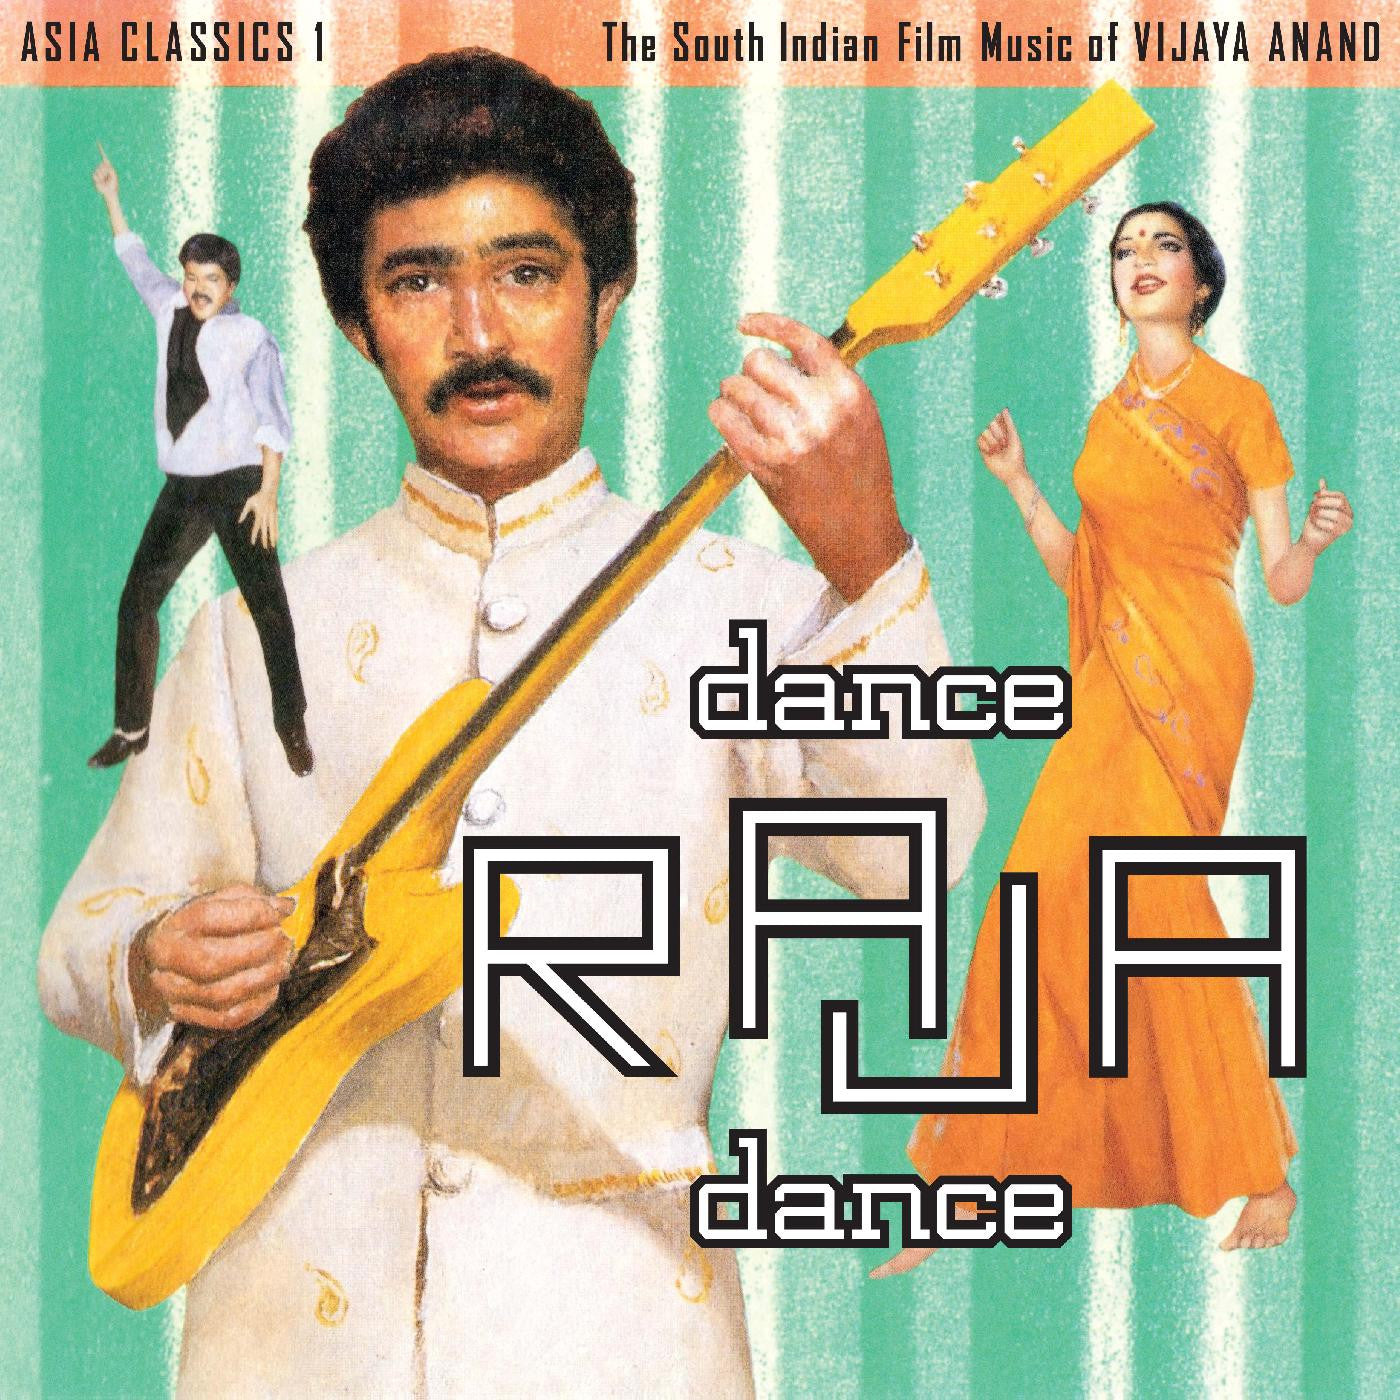 Vijaya Anand - Asia Classics 1: The South Indian Film Music of Vijaya Anand: Dance Raja Dance